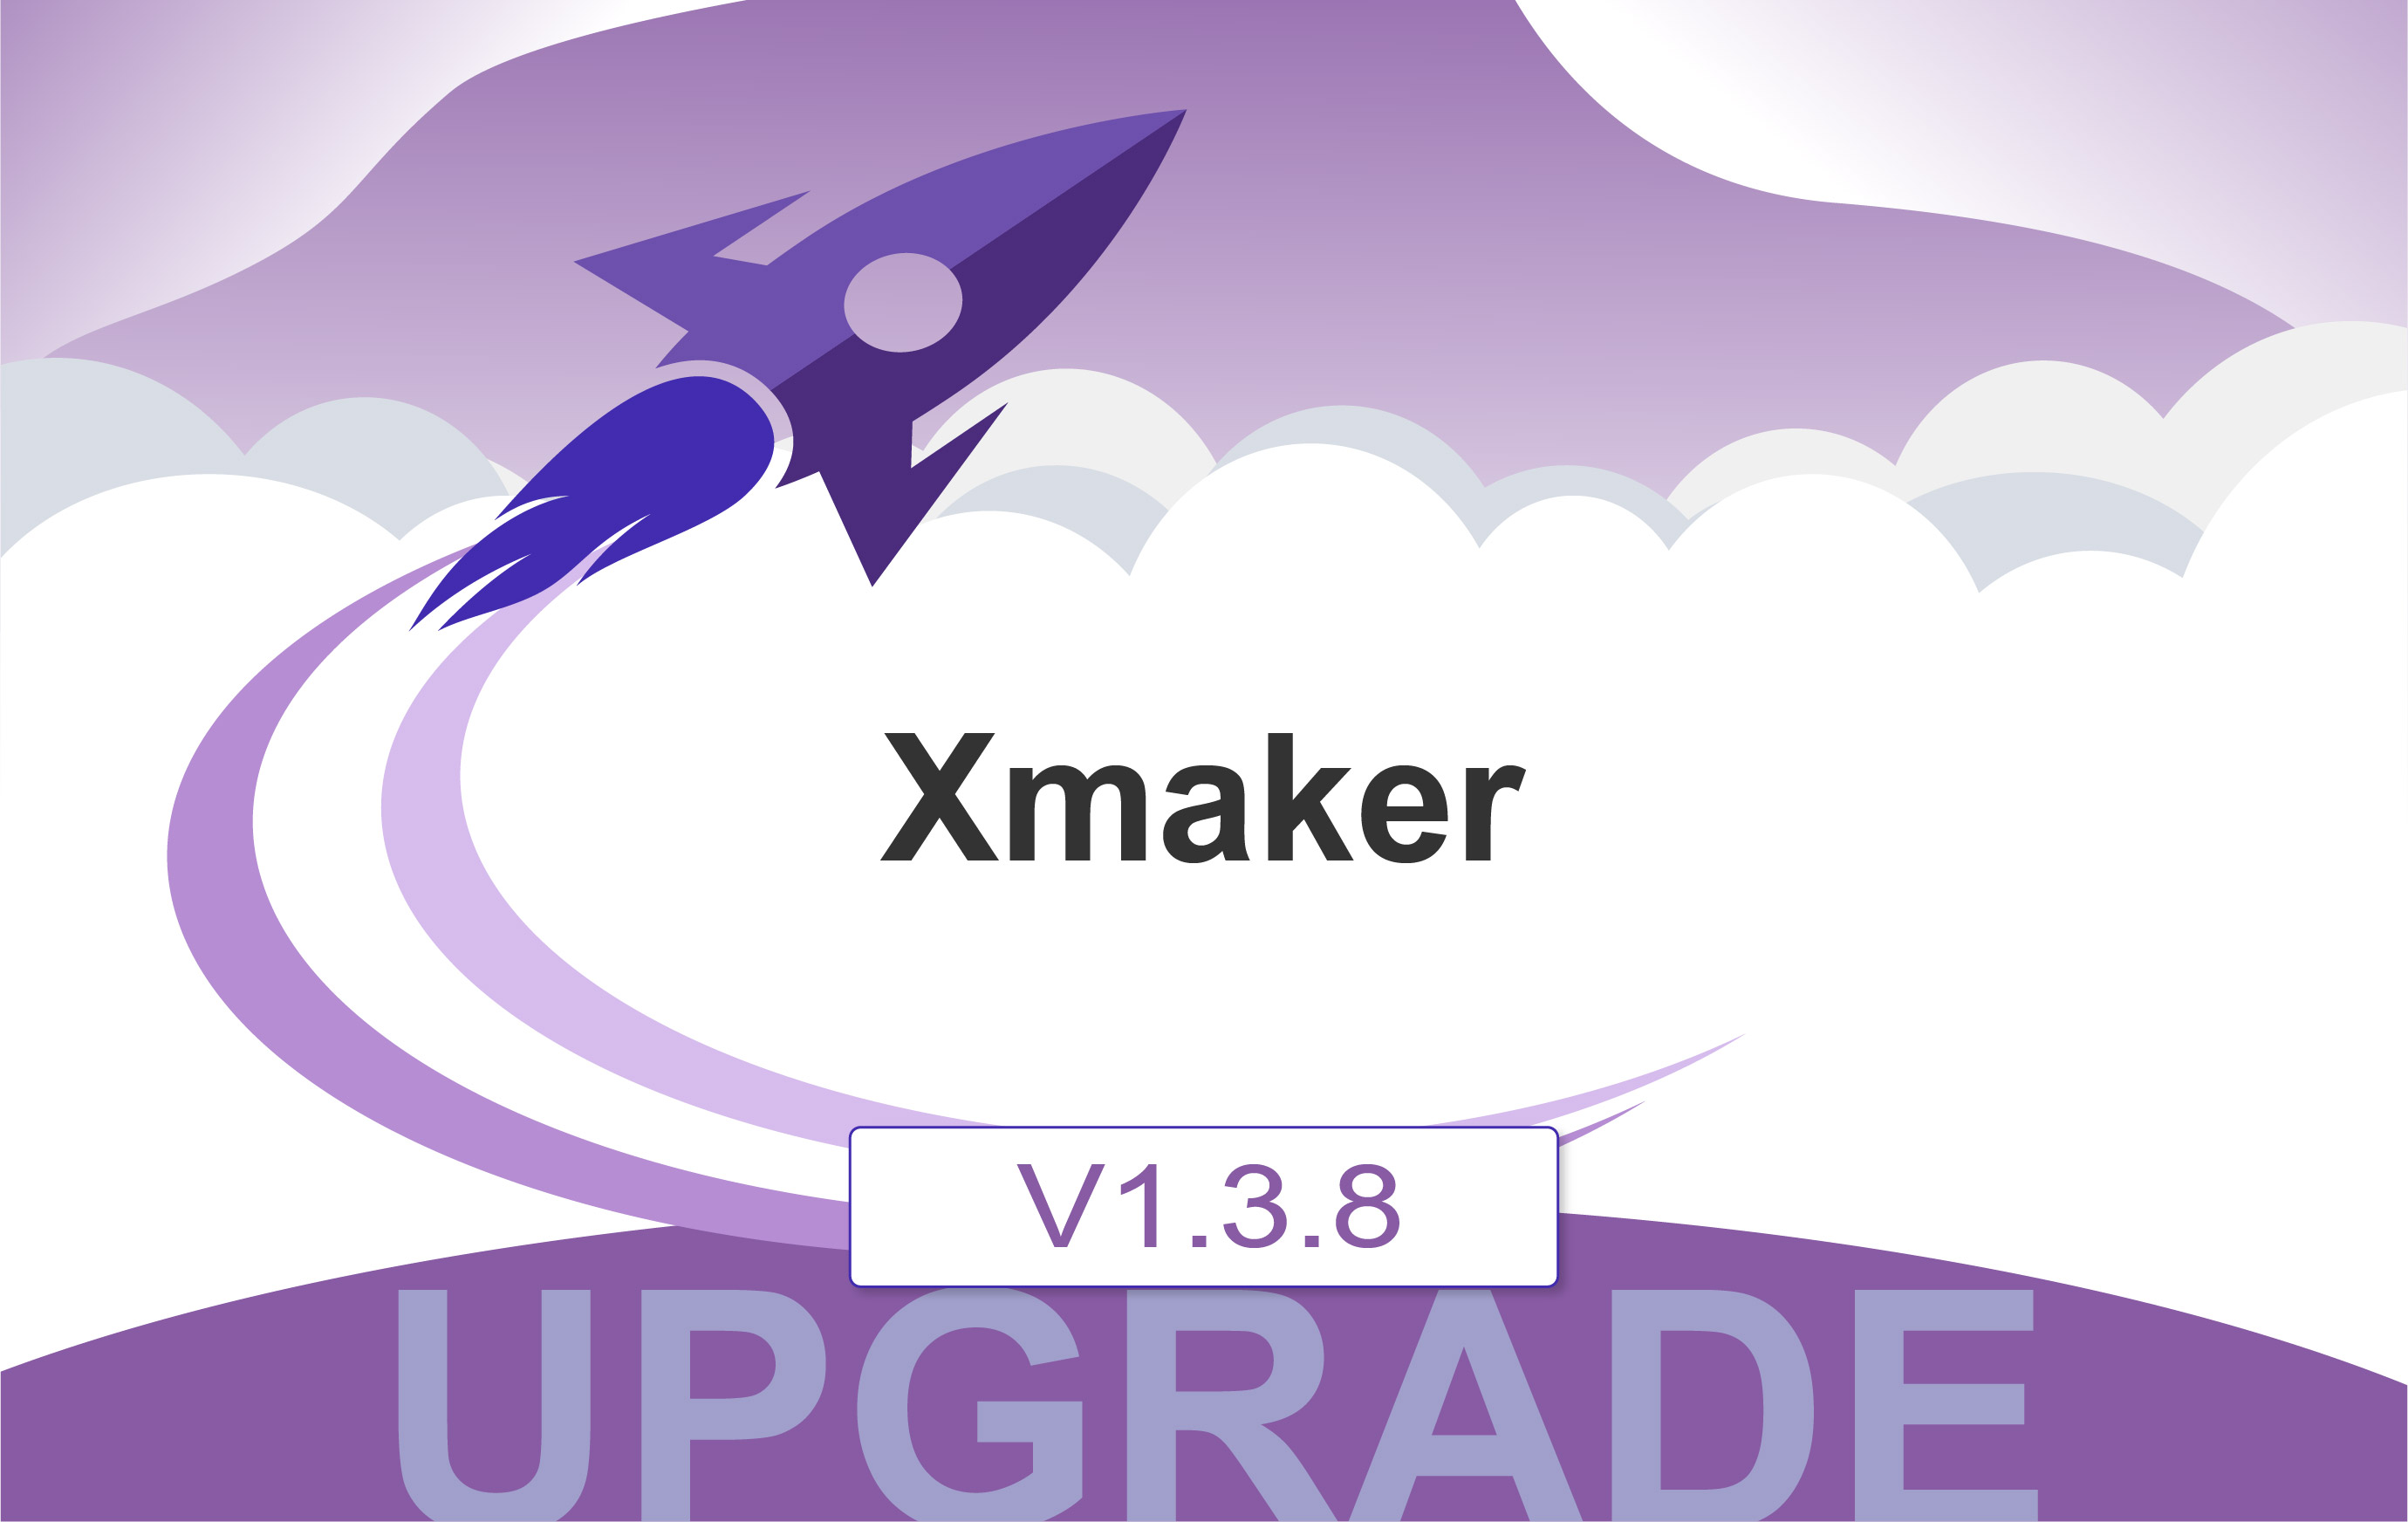 XMAKER V1.3.8 HAS RELEASED